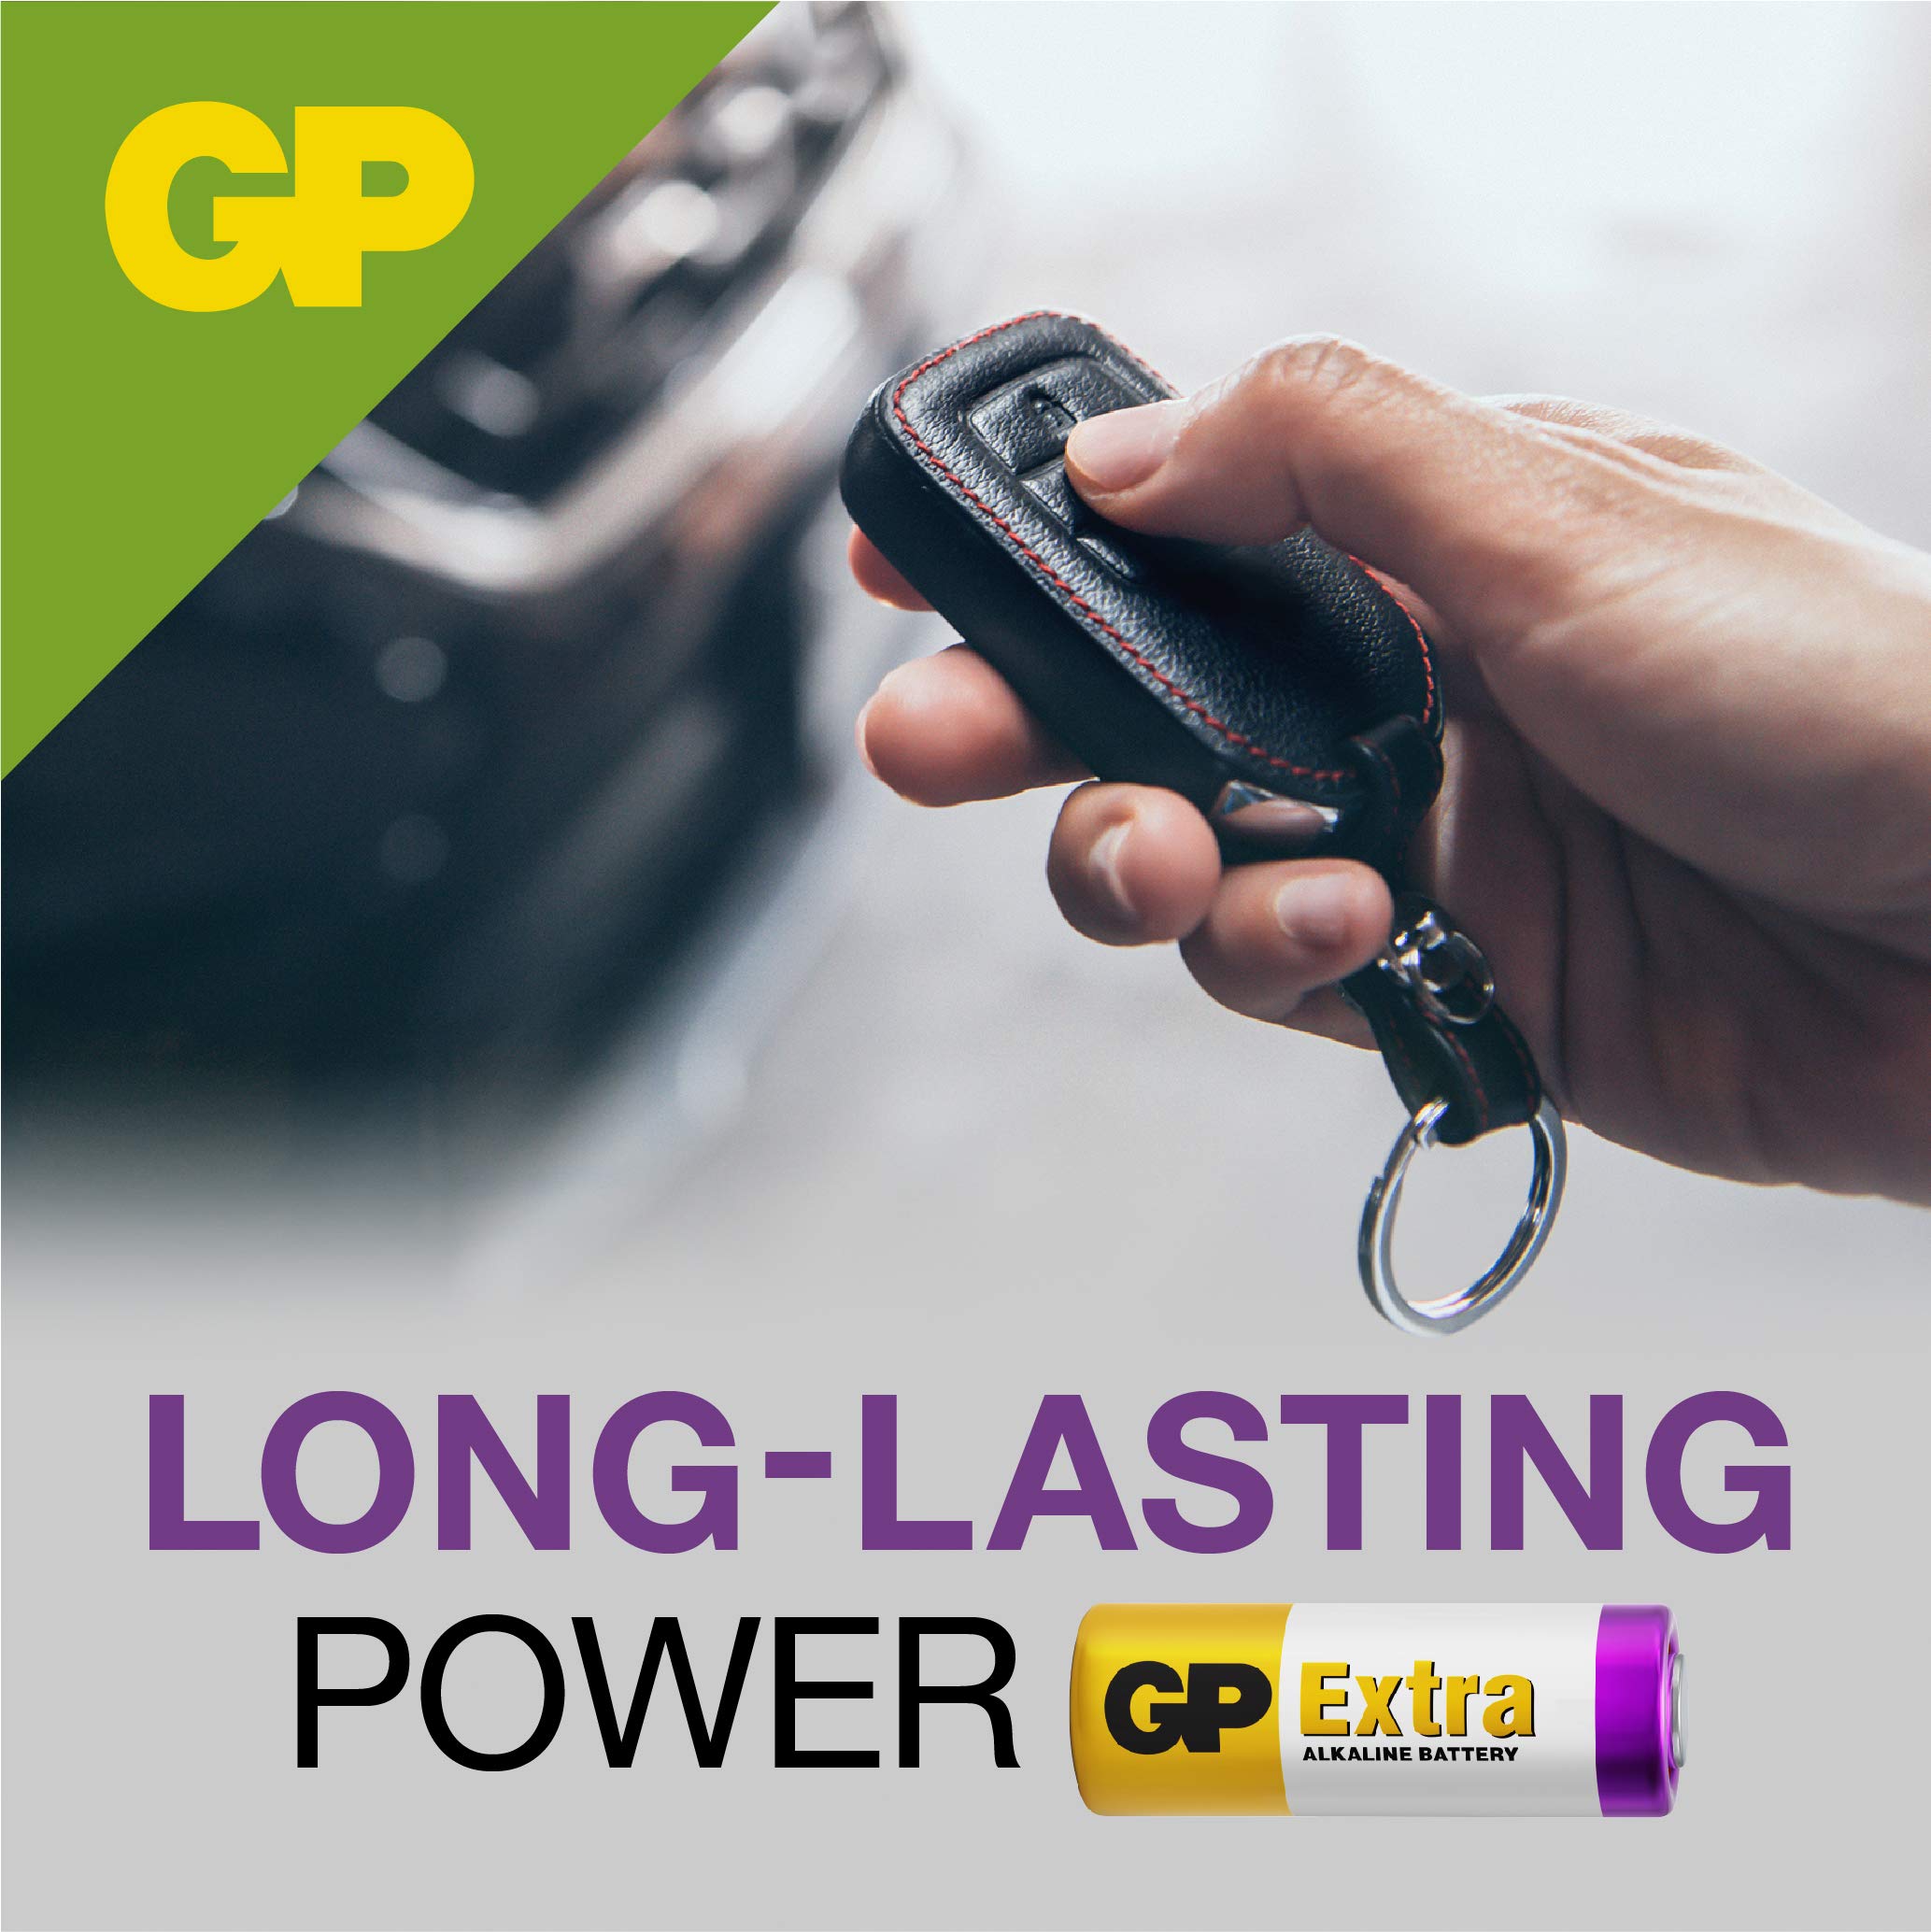 GP LR1 / Batteries N - Pack of 8 1.5V MN9100 / E90/ GP910A by GP Batteries N LR1 Extra Alkaline Batteries ideal for: Bike Lights/Alarm Systems/Garage door openers/GPS Trackers/Motion Sensors etc.